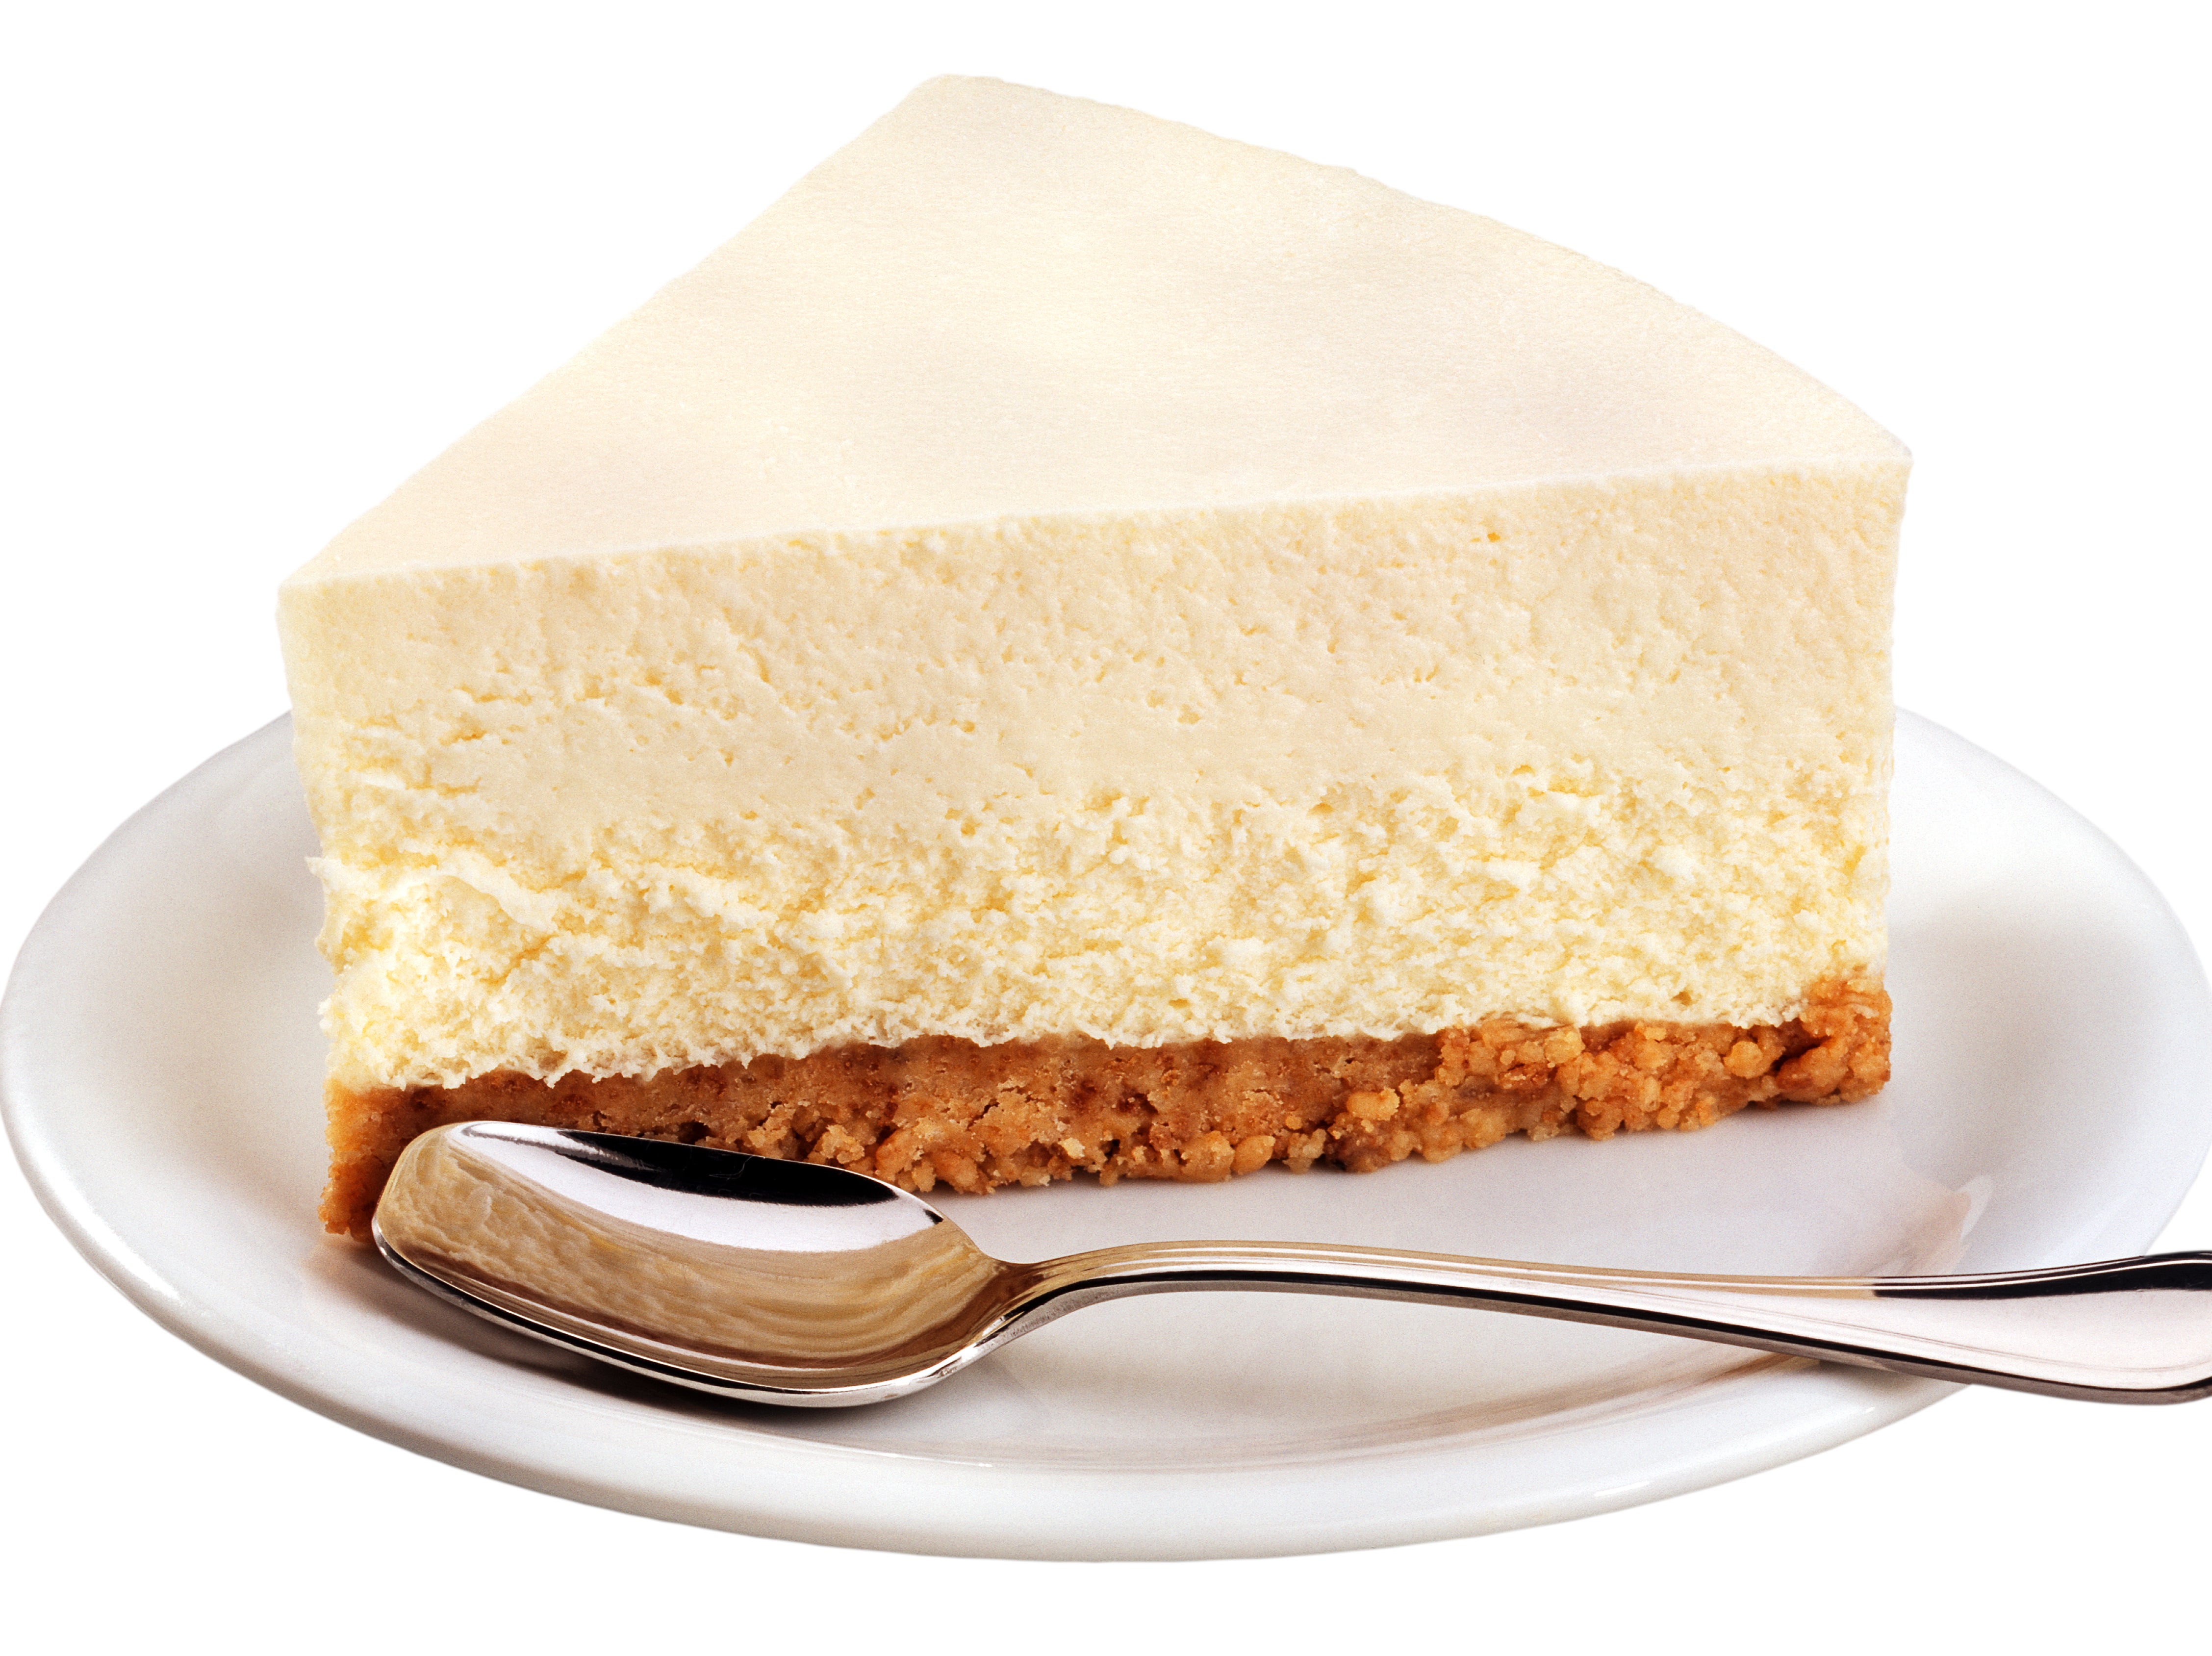 A cheesecake